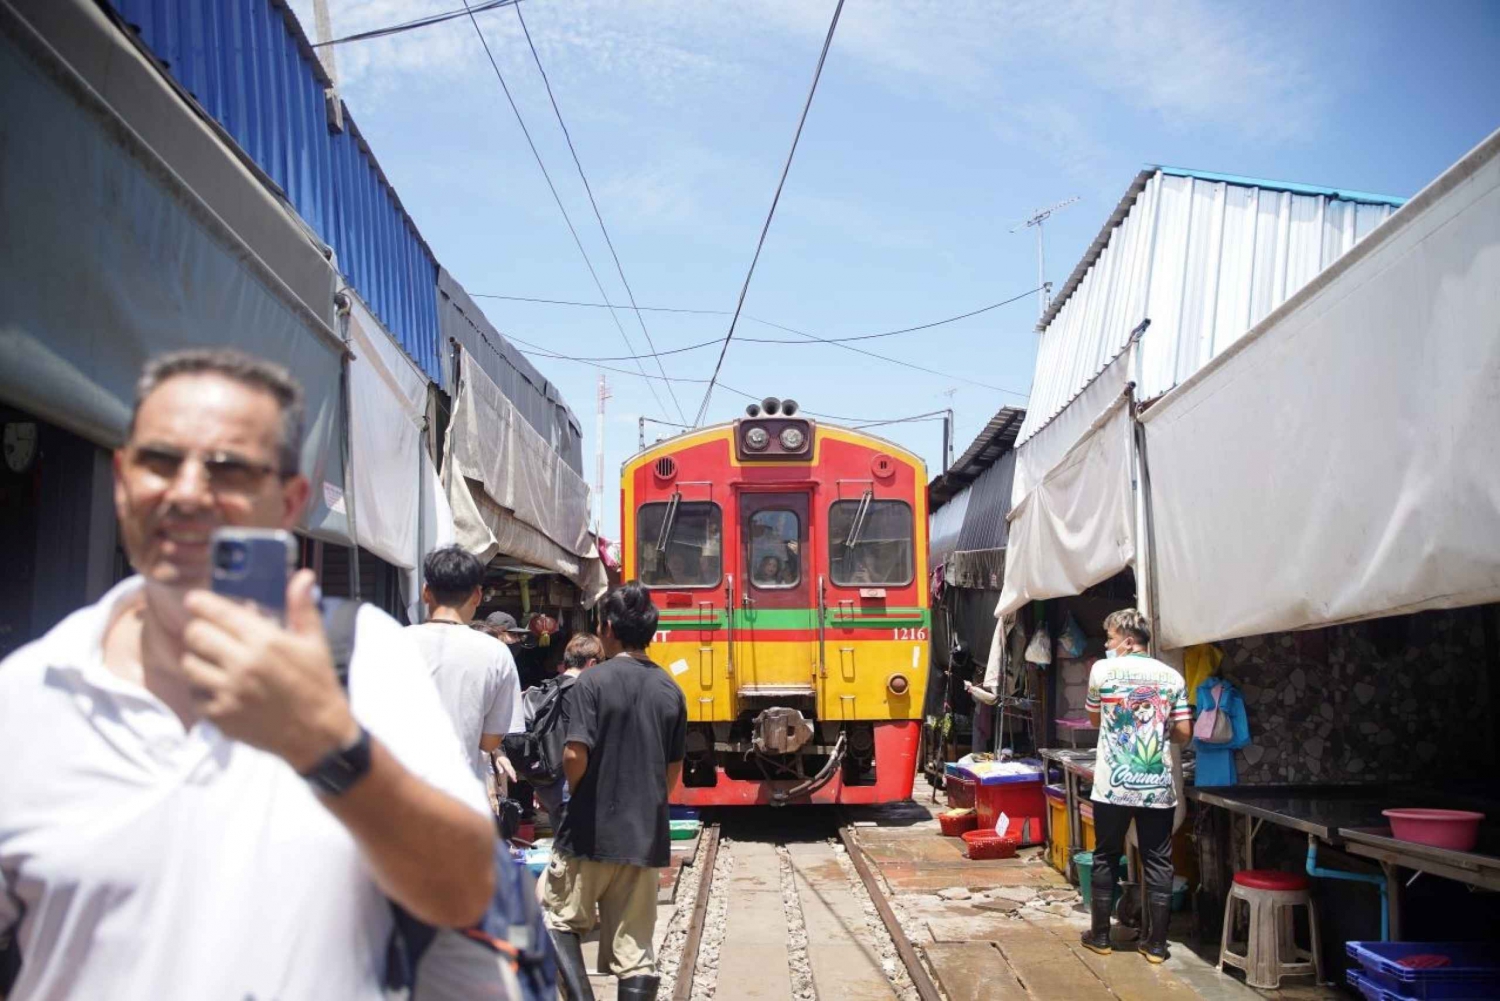 From Bangkok : Meklong Railway Market By Bus